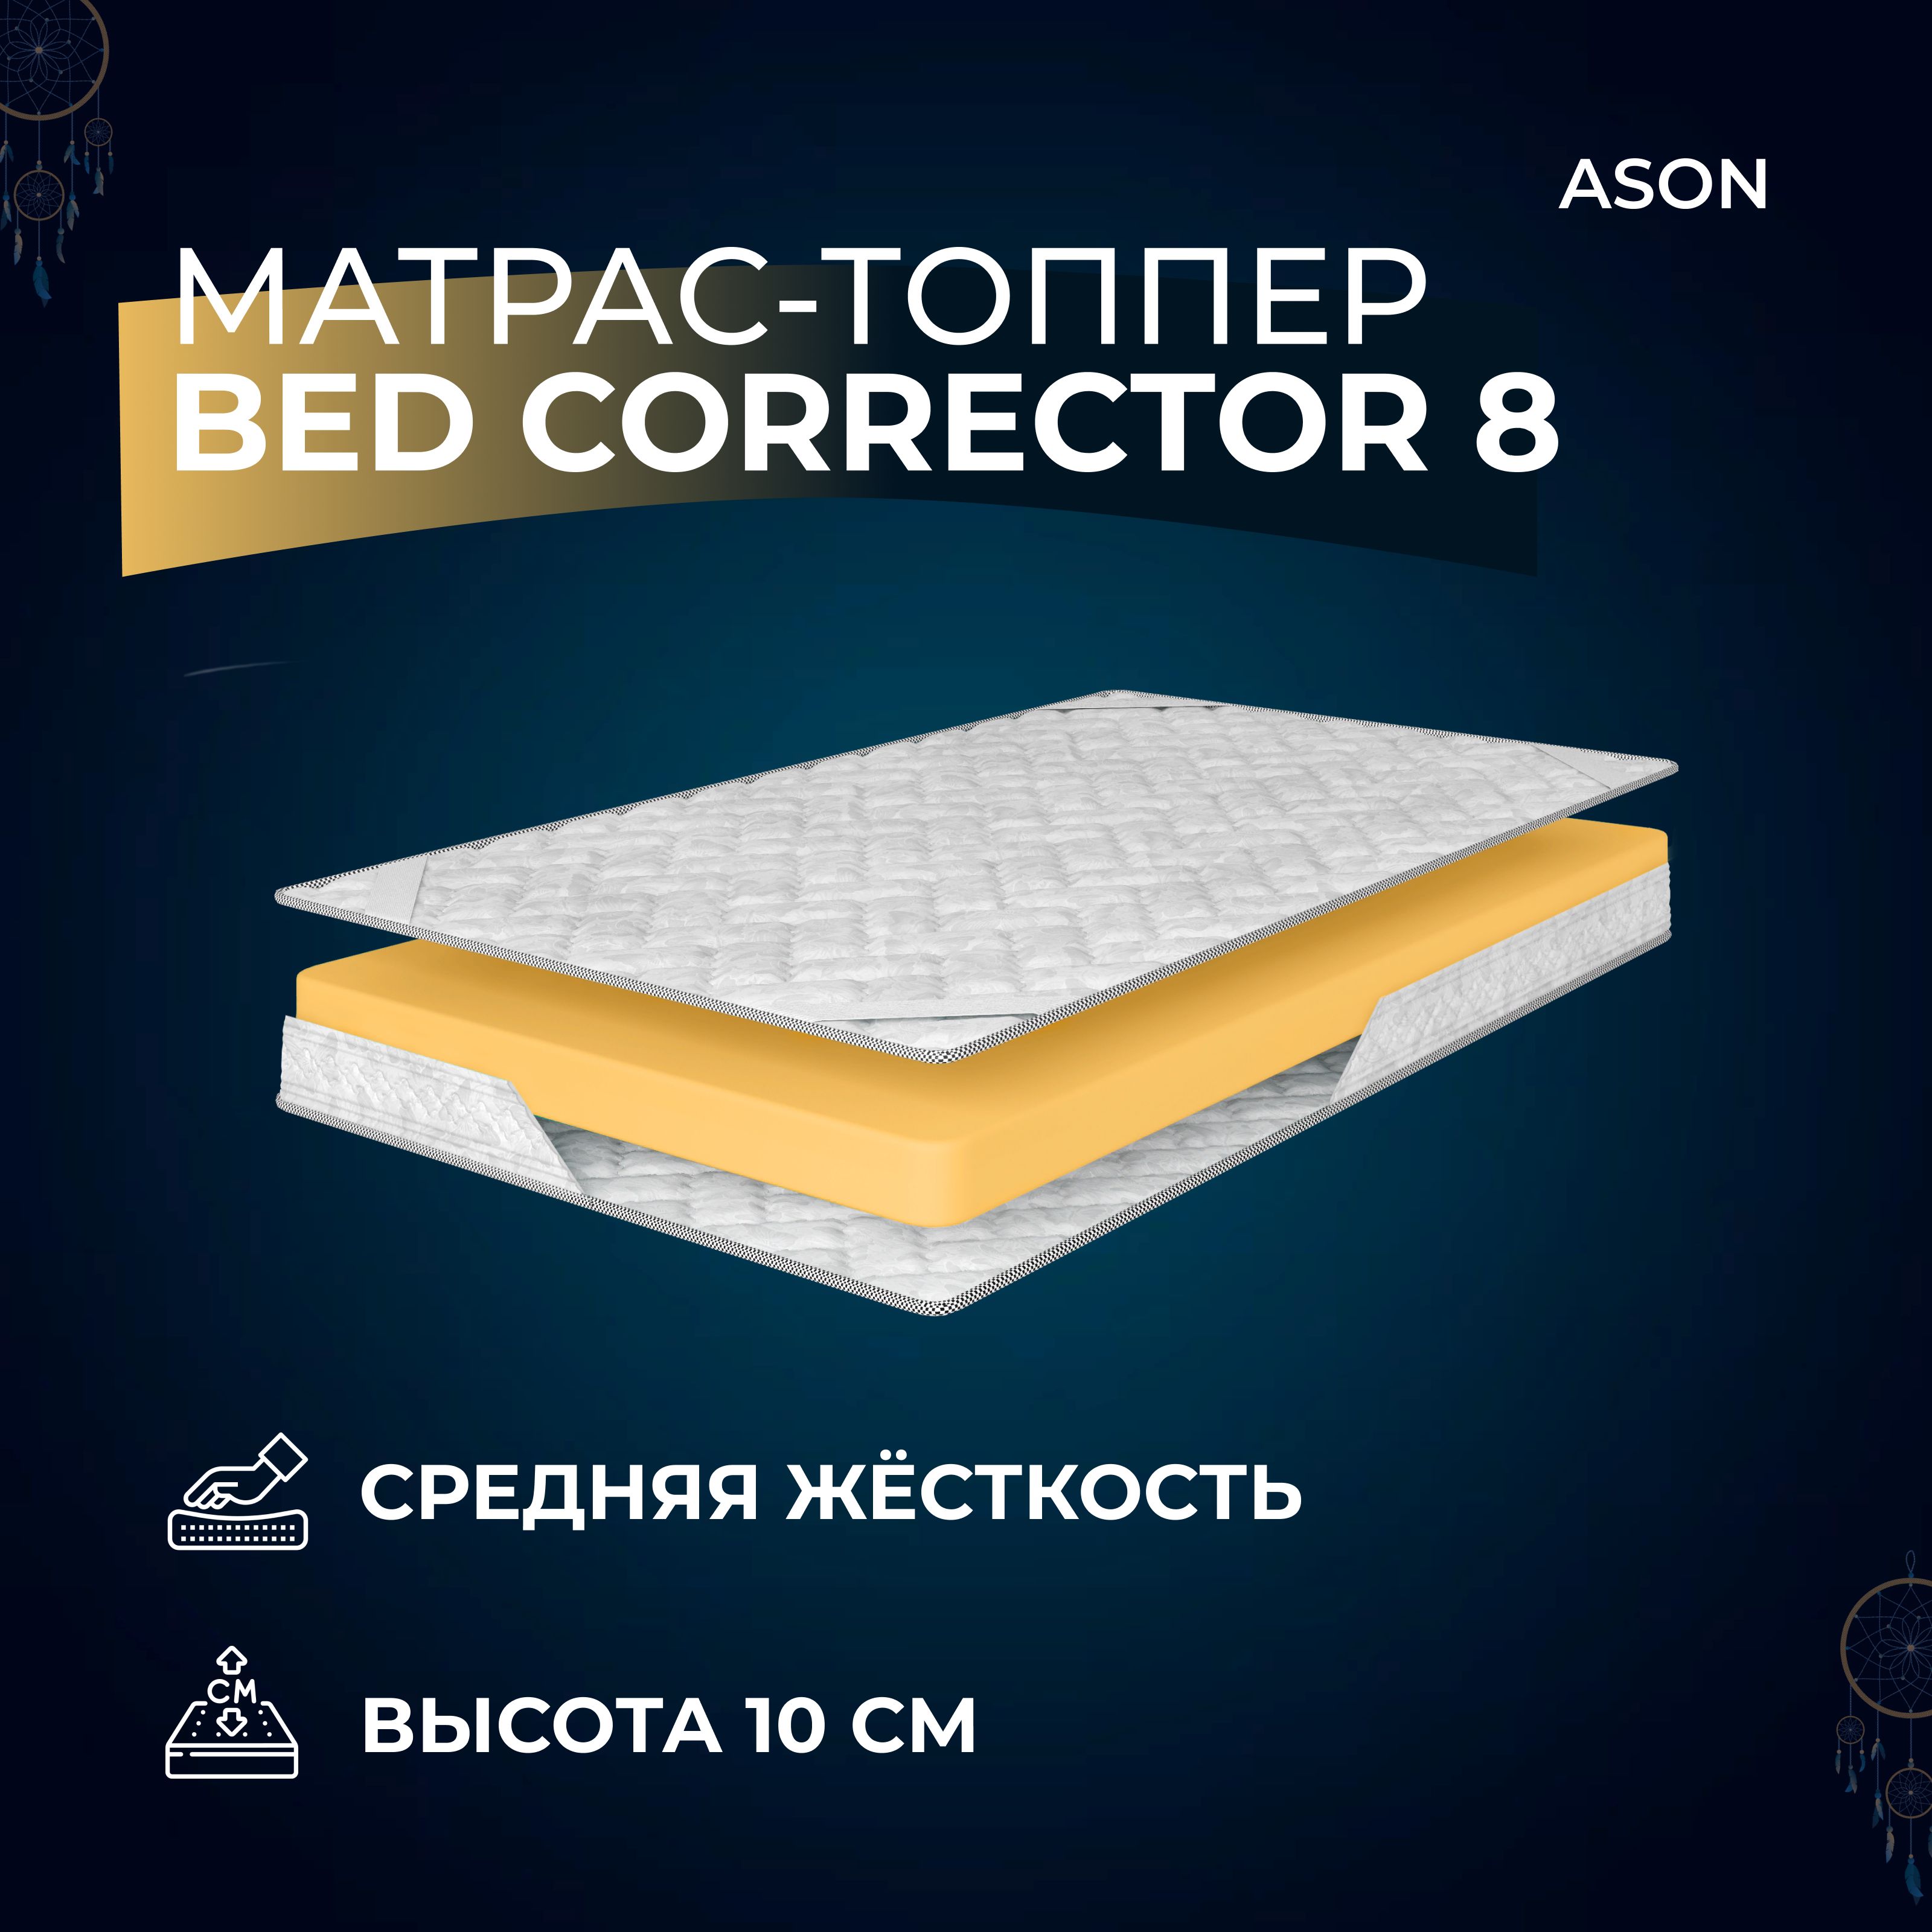 Матрас-топпер 115х190 Ason, Bed corrector 8